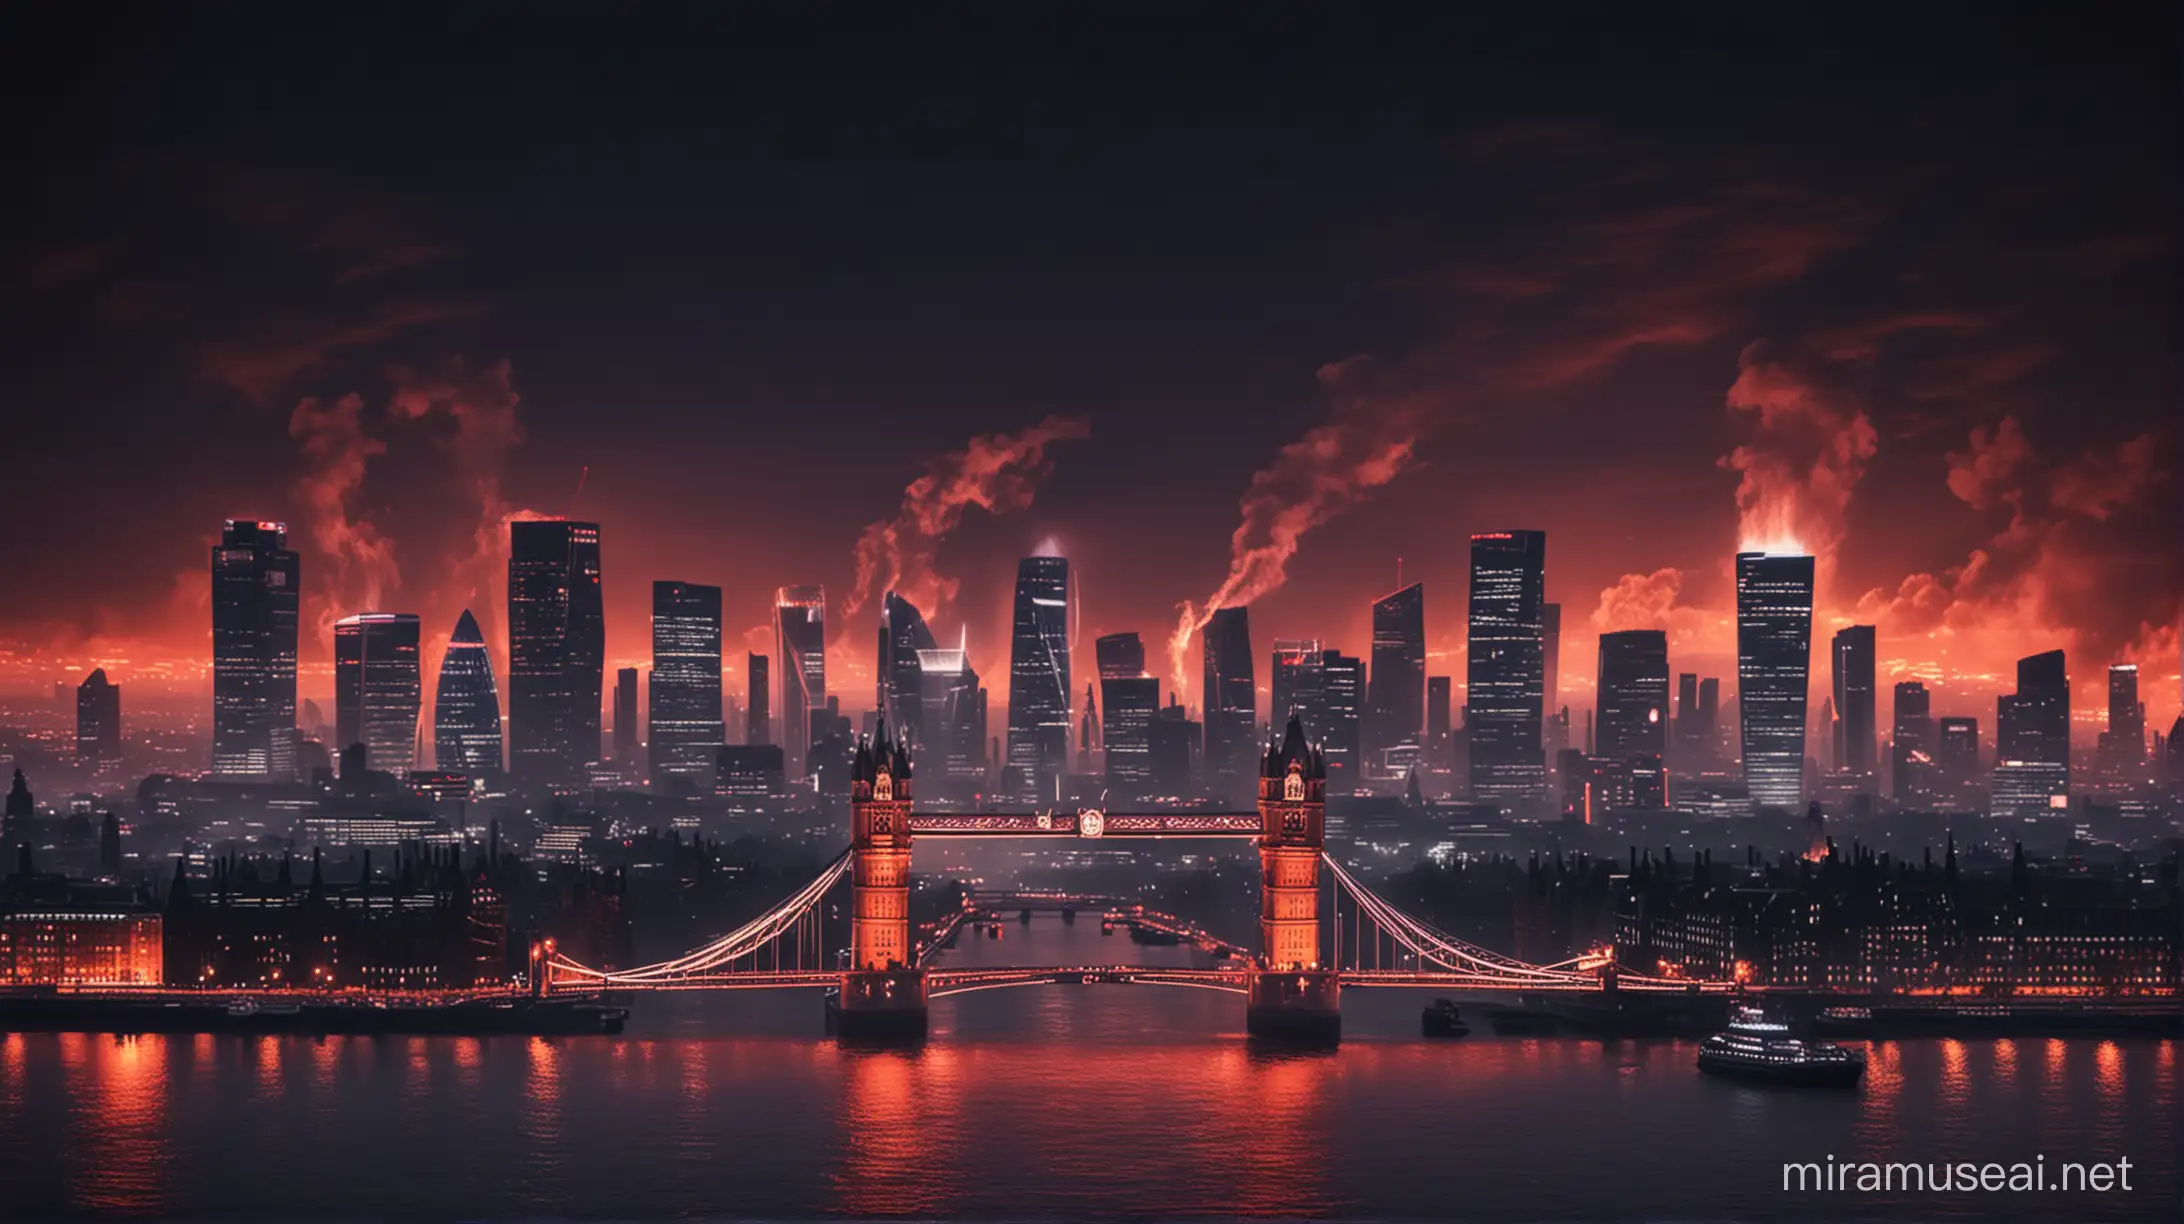 Vibrant Neon London Skyline Illuminated by Cinematic Lighting